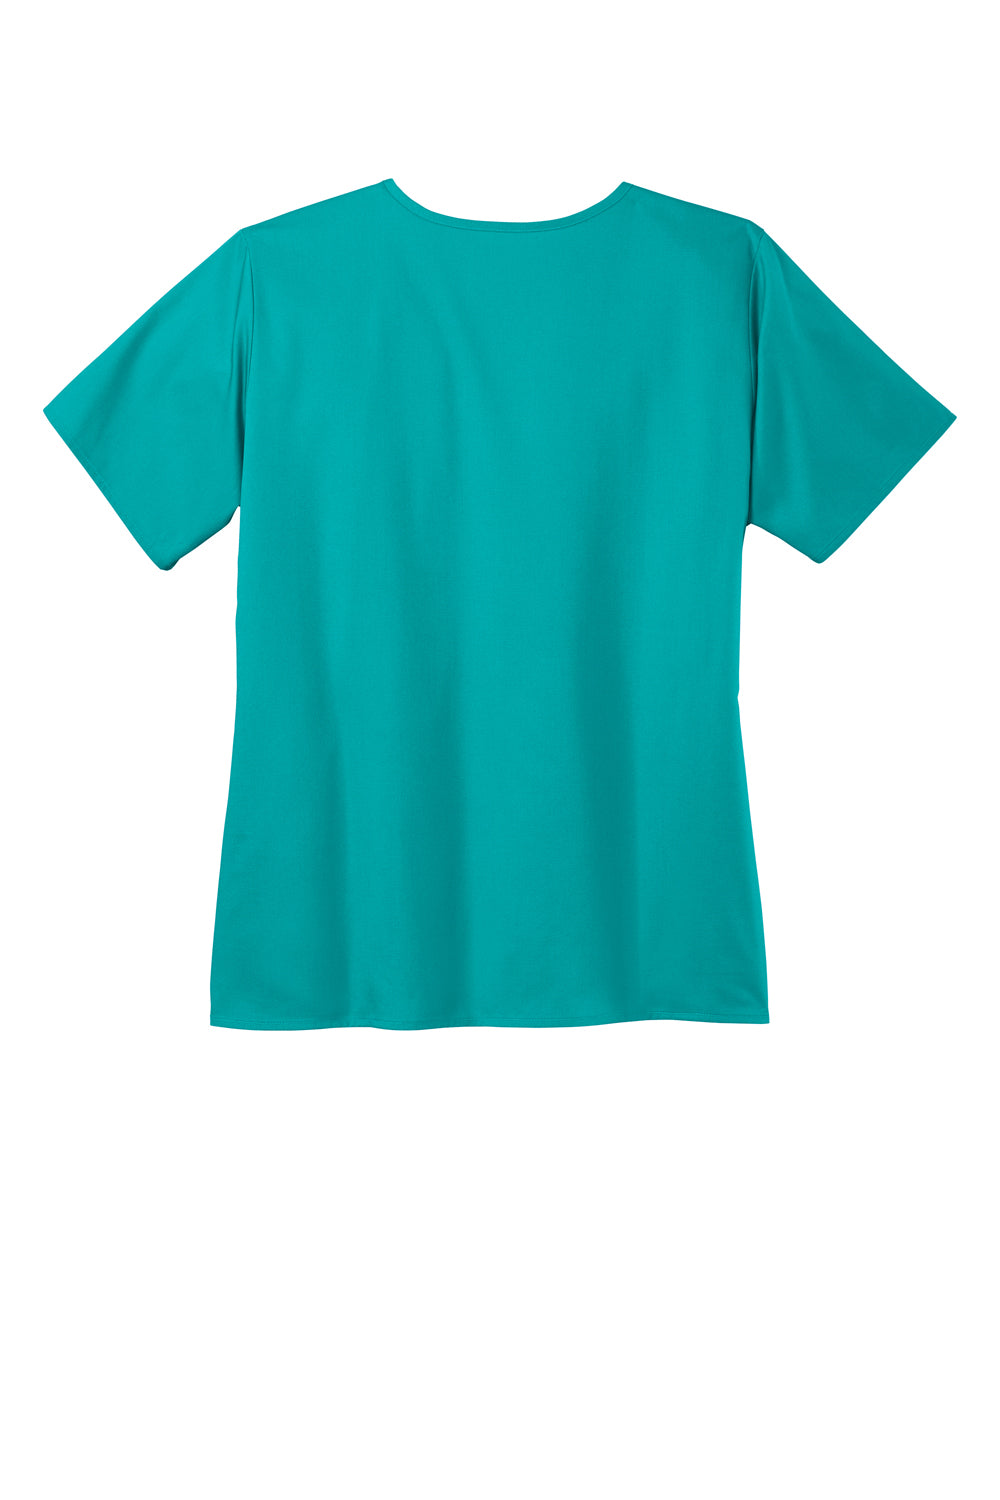 Wonderwink WW4760 WorkFlex Short Sleeve V-Neck Mock Wrap Shirt Teal Blue Flat Back